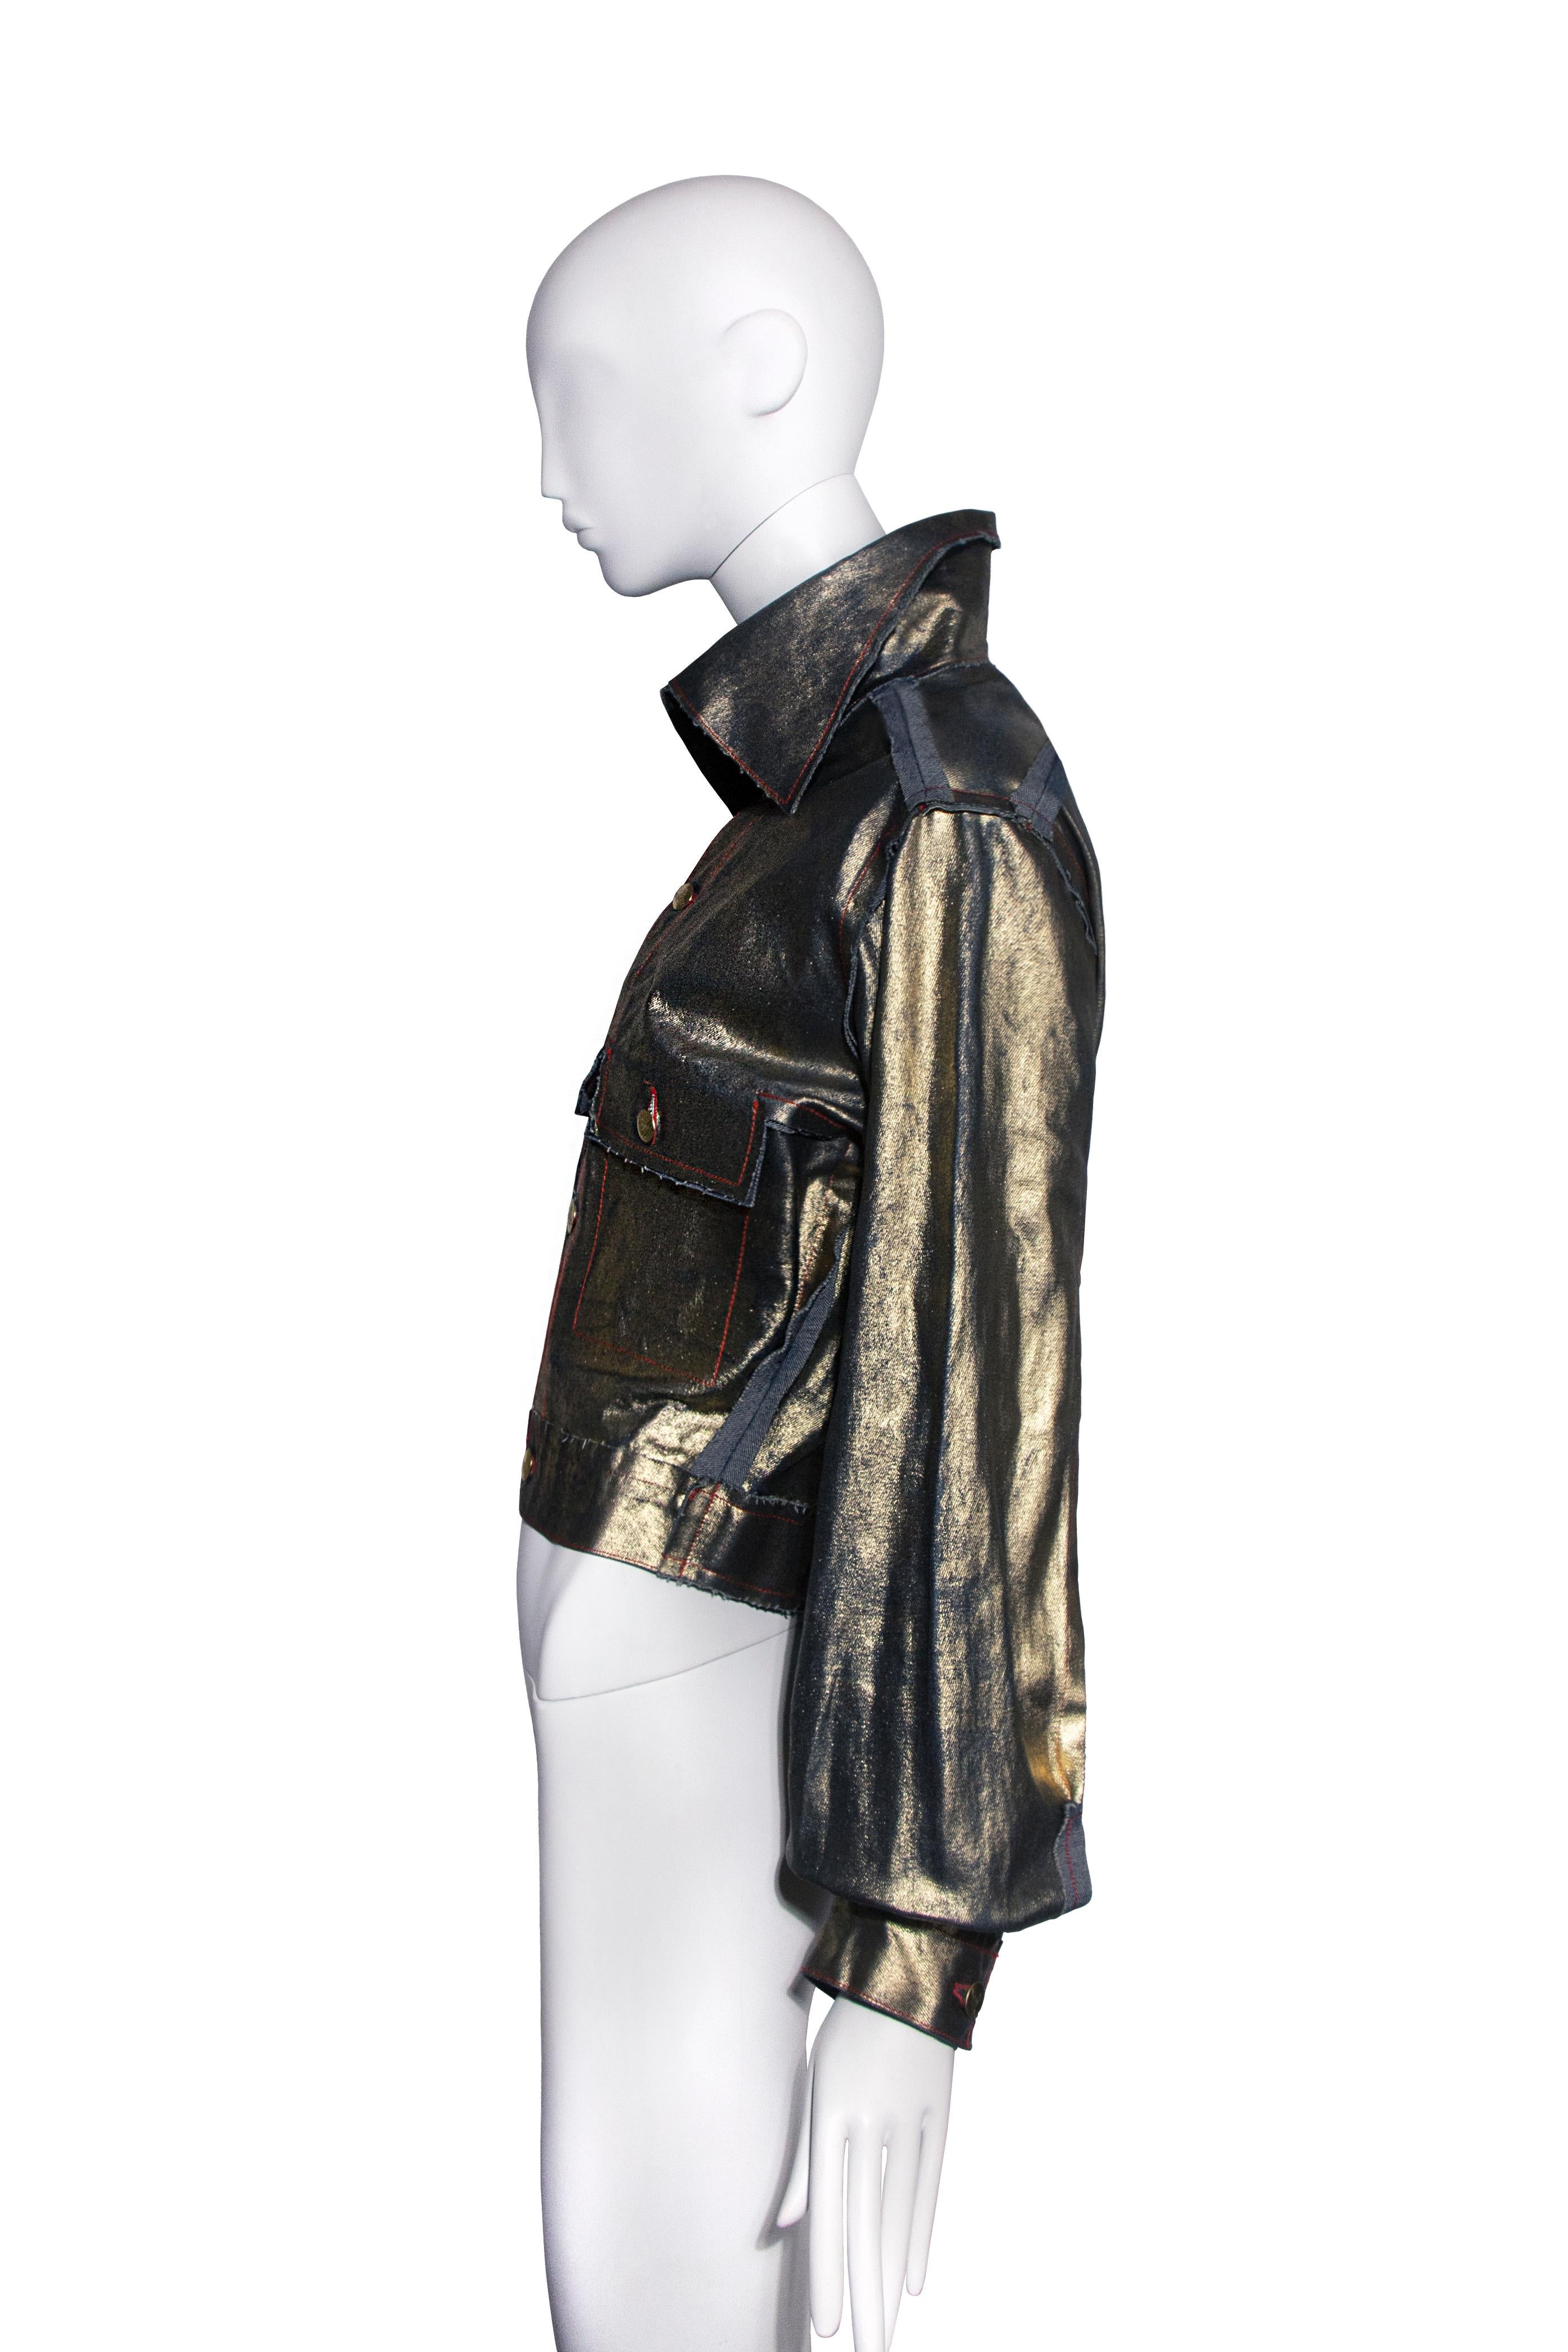  Vivienne Westwood 'Grand Hotel' metallic gold painted denim jacket, ss 1993 For Sale 3